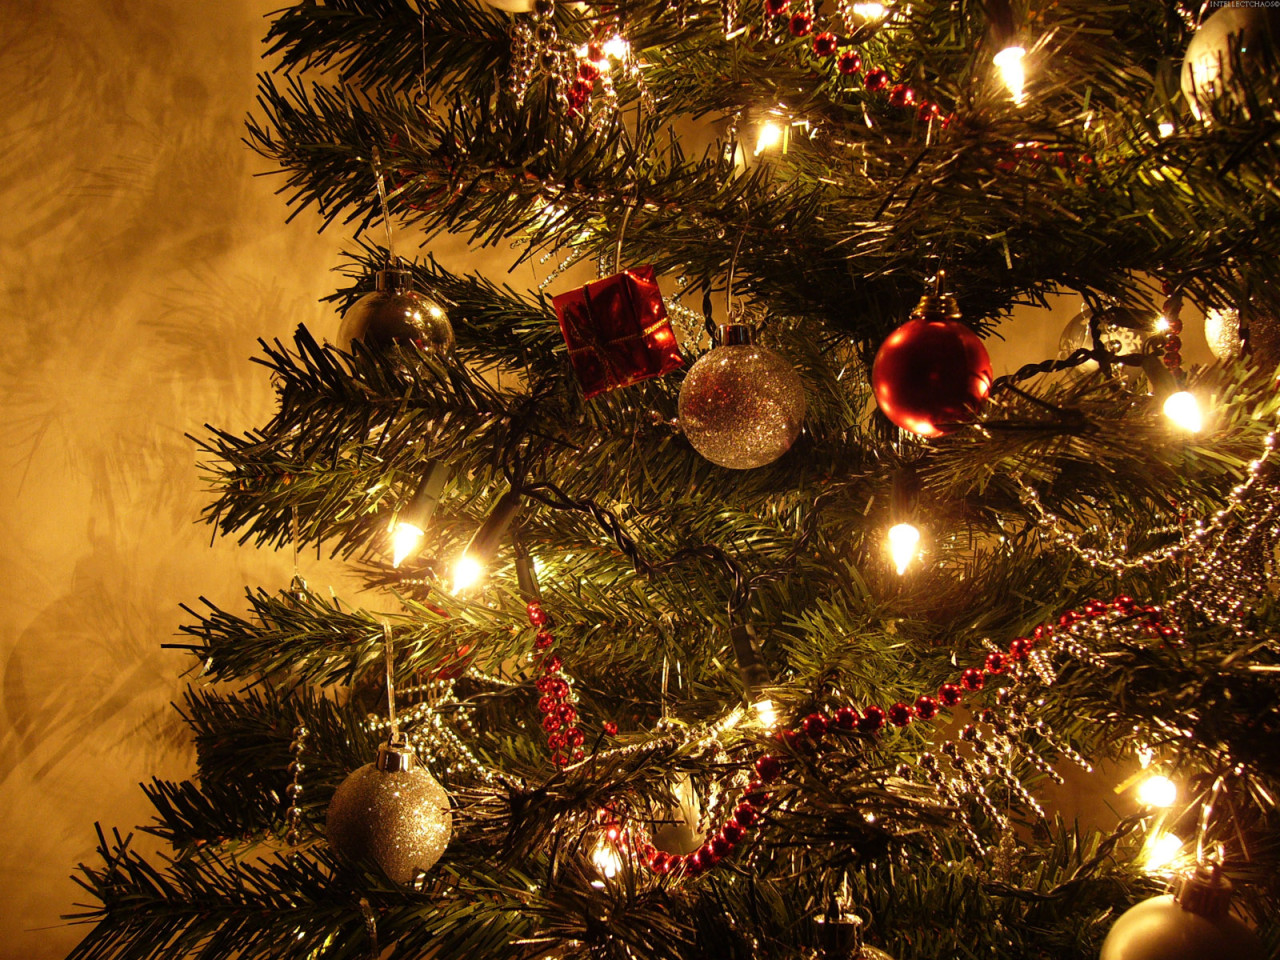 Spruce tree / Christmas